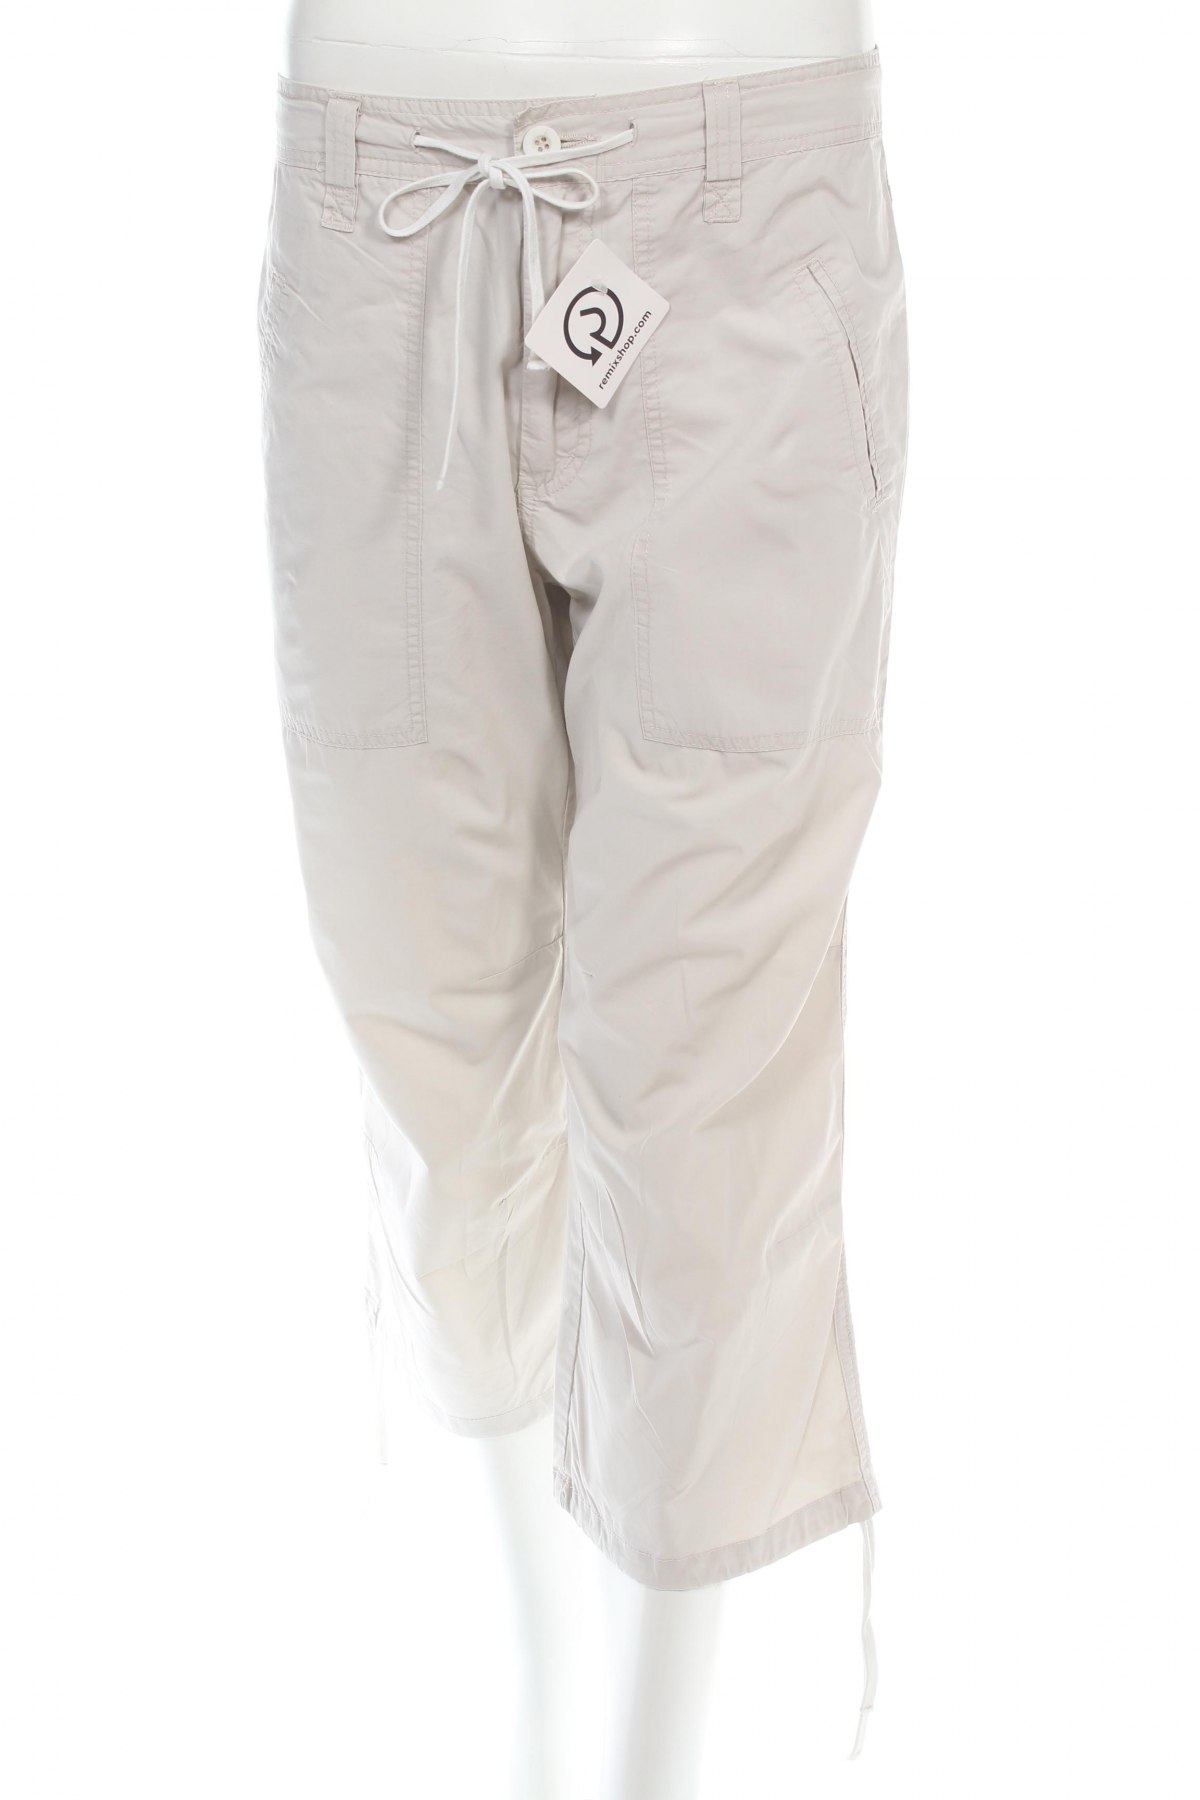 Дамски панталон Y.Yendi, Размер M, Цвят Бежов, Цена 19,55 лв.